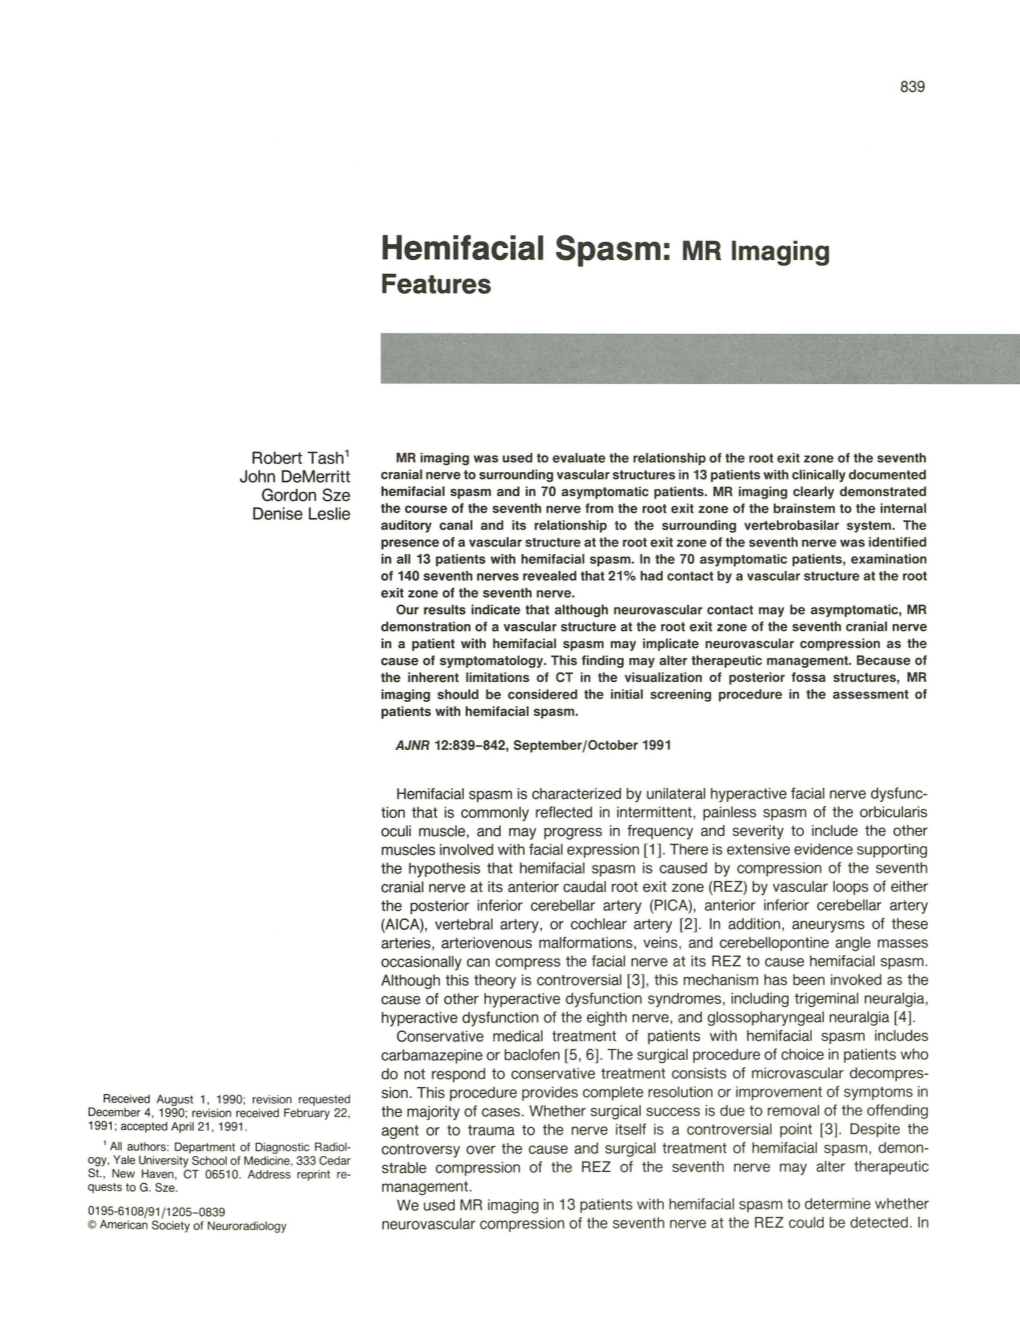 Hemifacial Spasm: MR Imaging Features